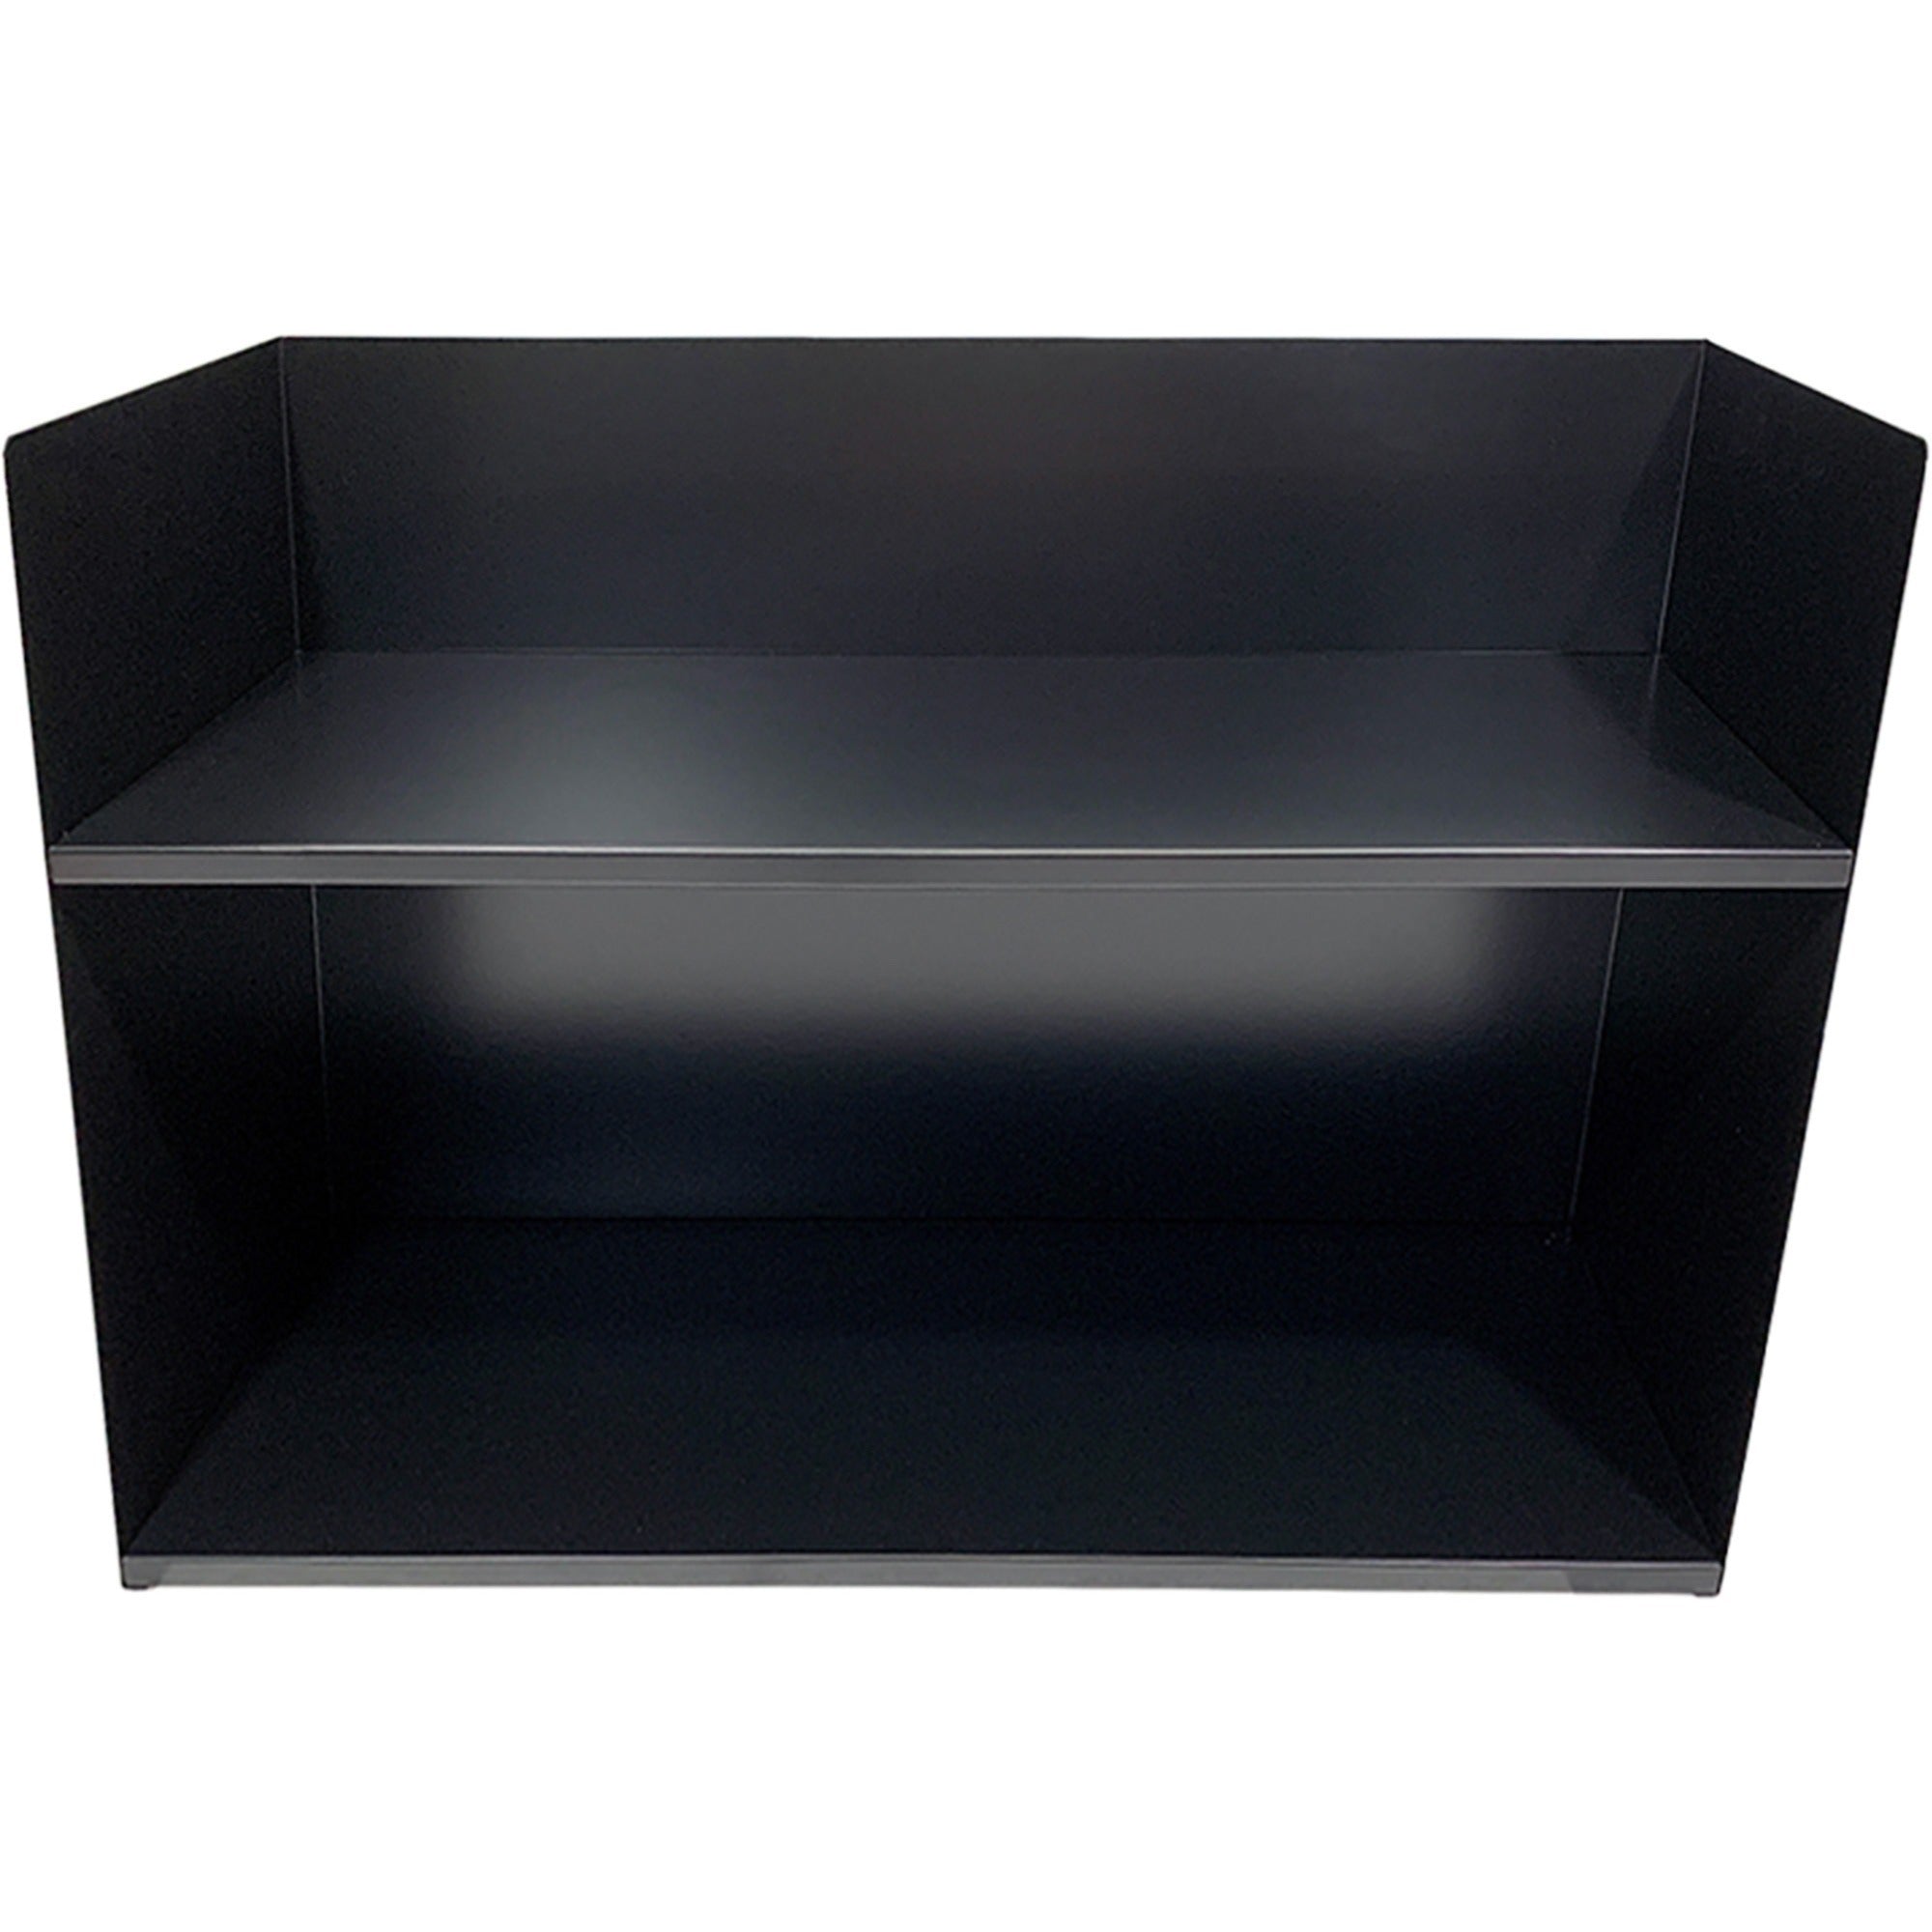 huron-2-tier-book-rack-2-compartments-2-tiers-horizontal-20-height-x-29-width-x-103-depth-durable-black-steel-1-each_hurhasz0177 - 2